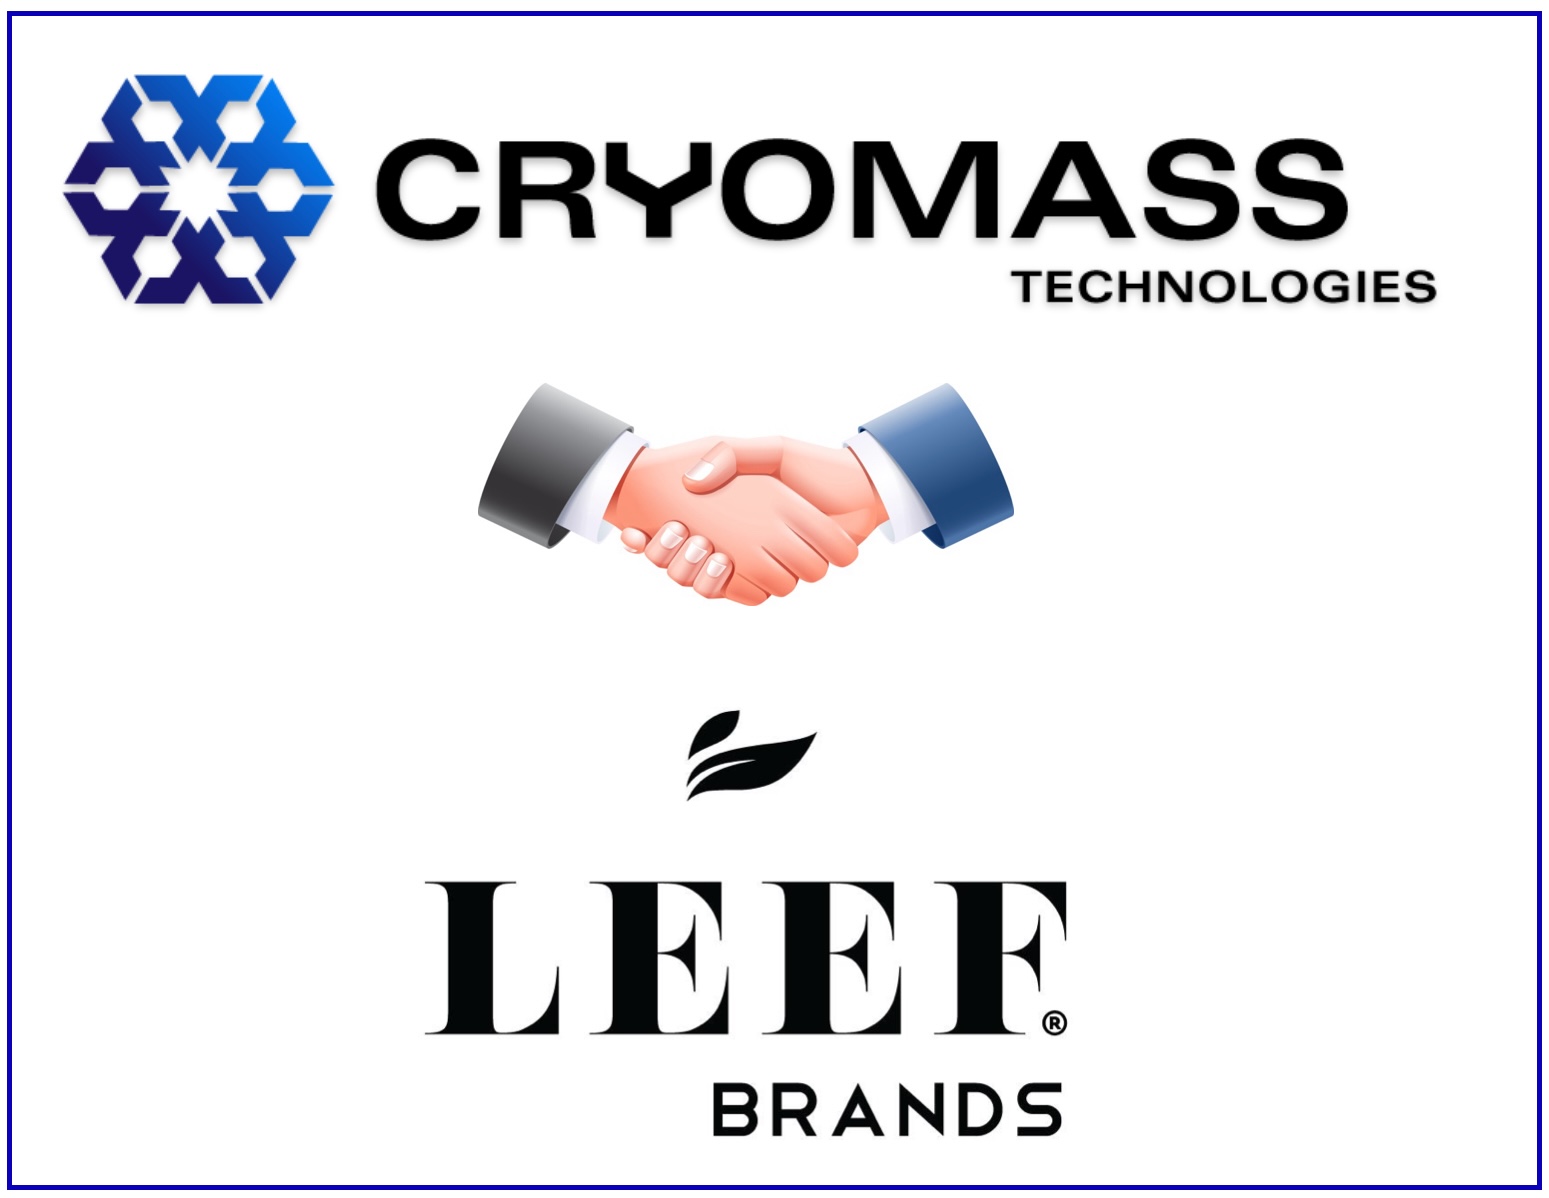 CryoMass Partners with Cannabis Powerhouse LEEF